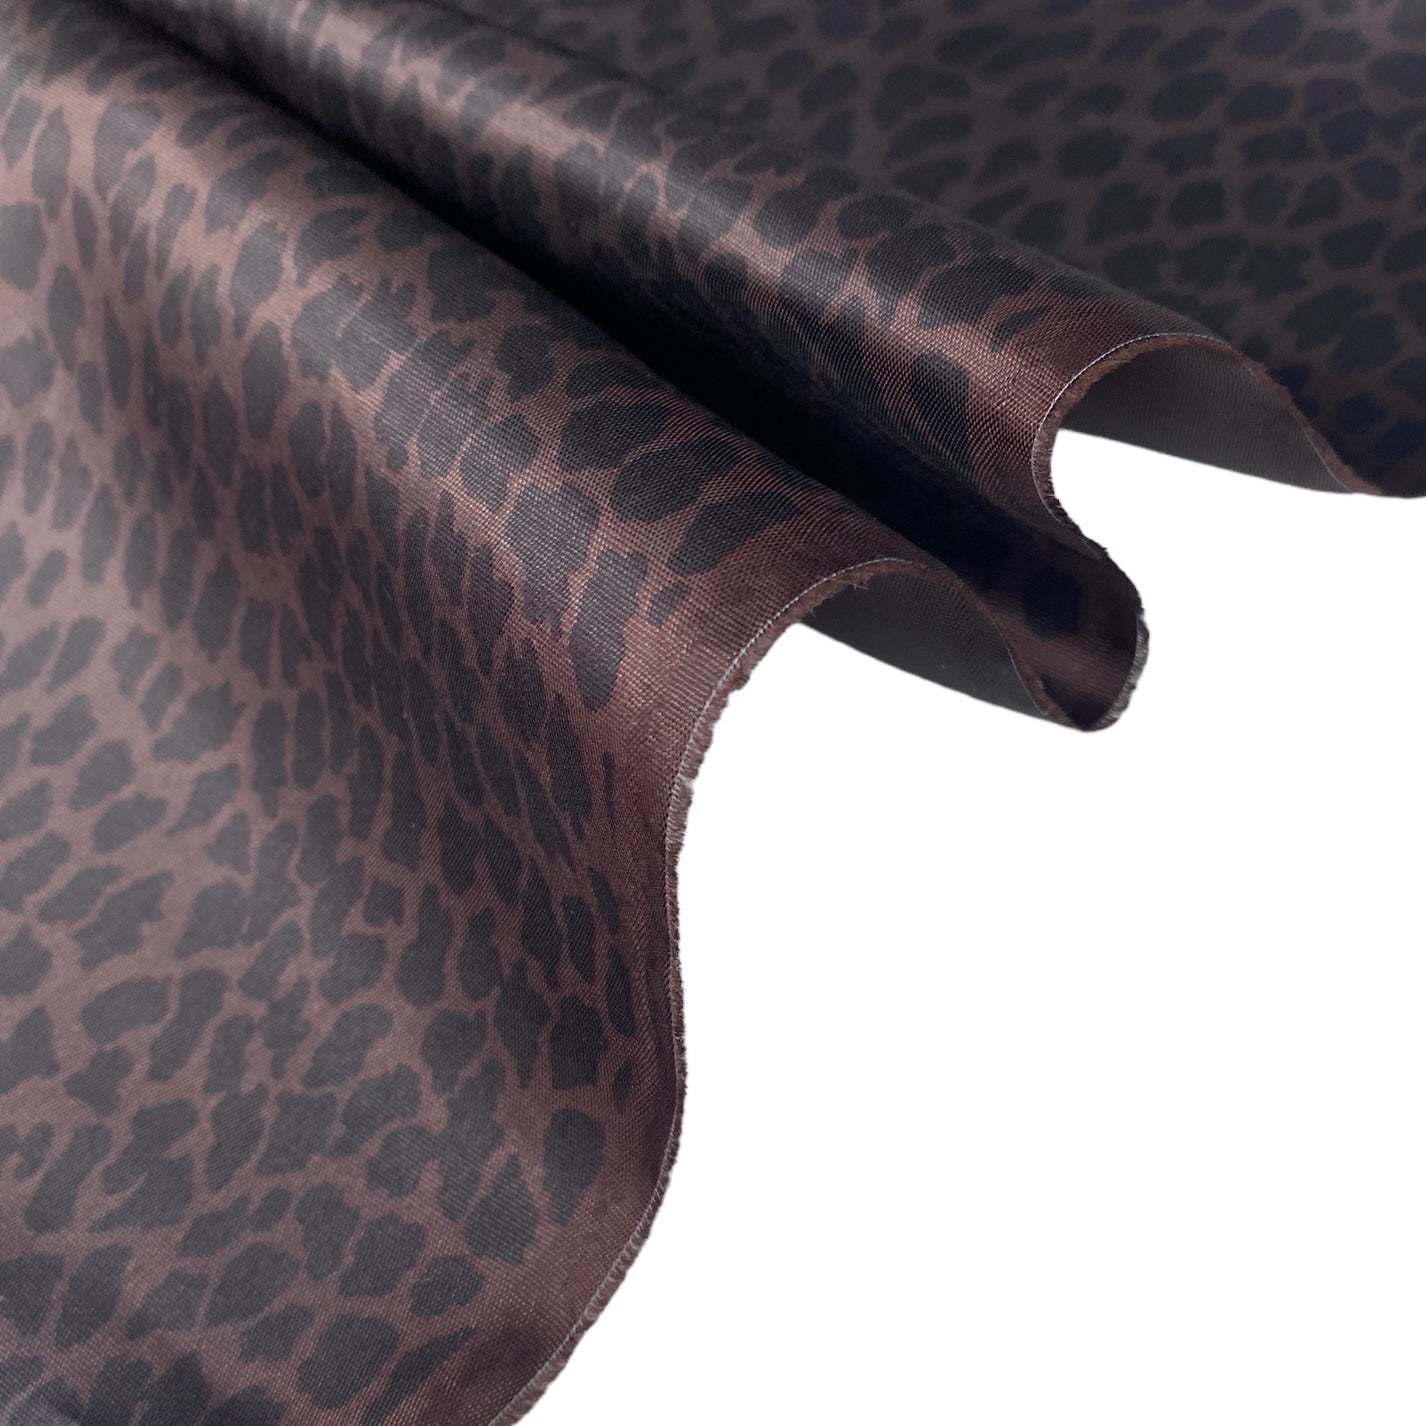 Printed Cheetah Lining - Brown/Black